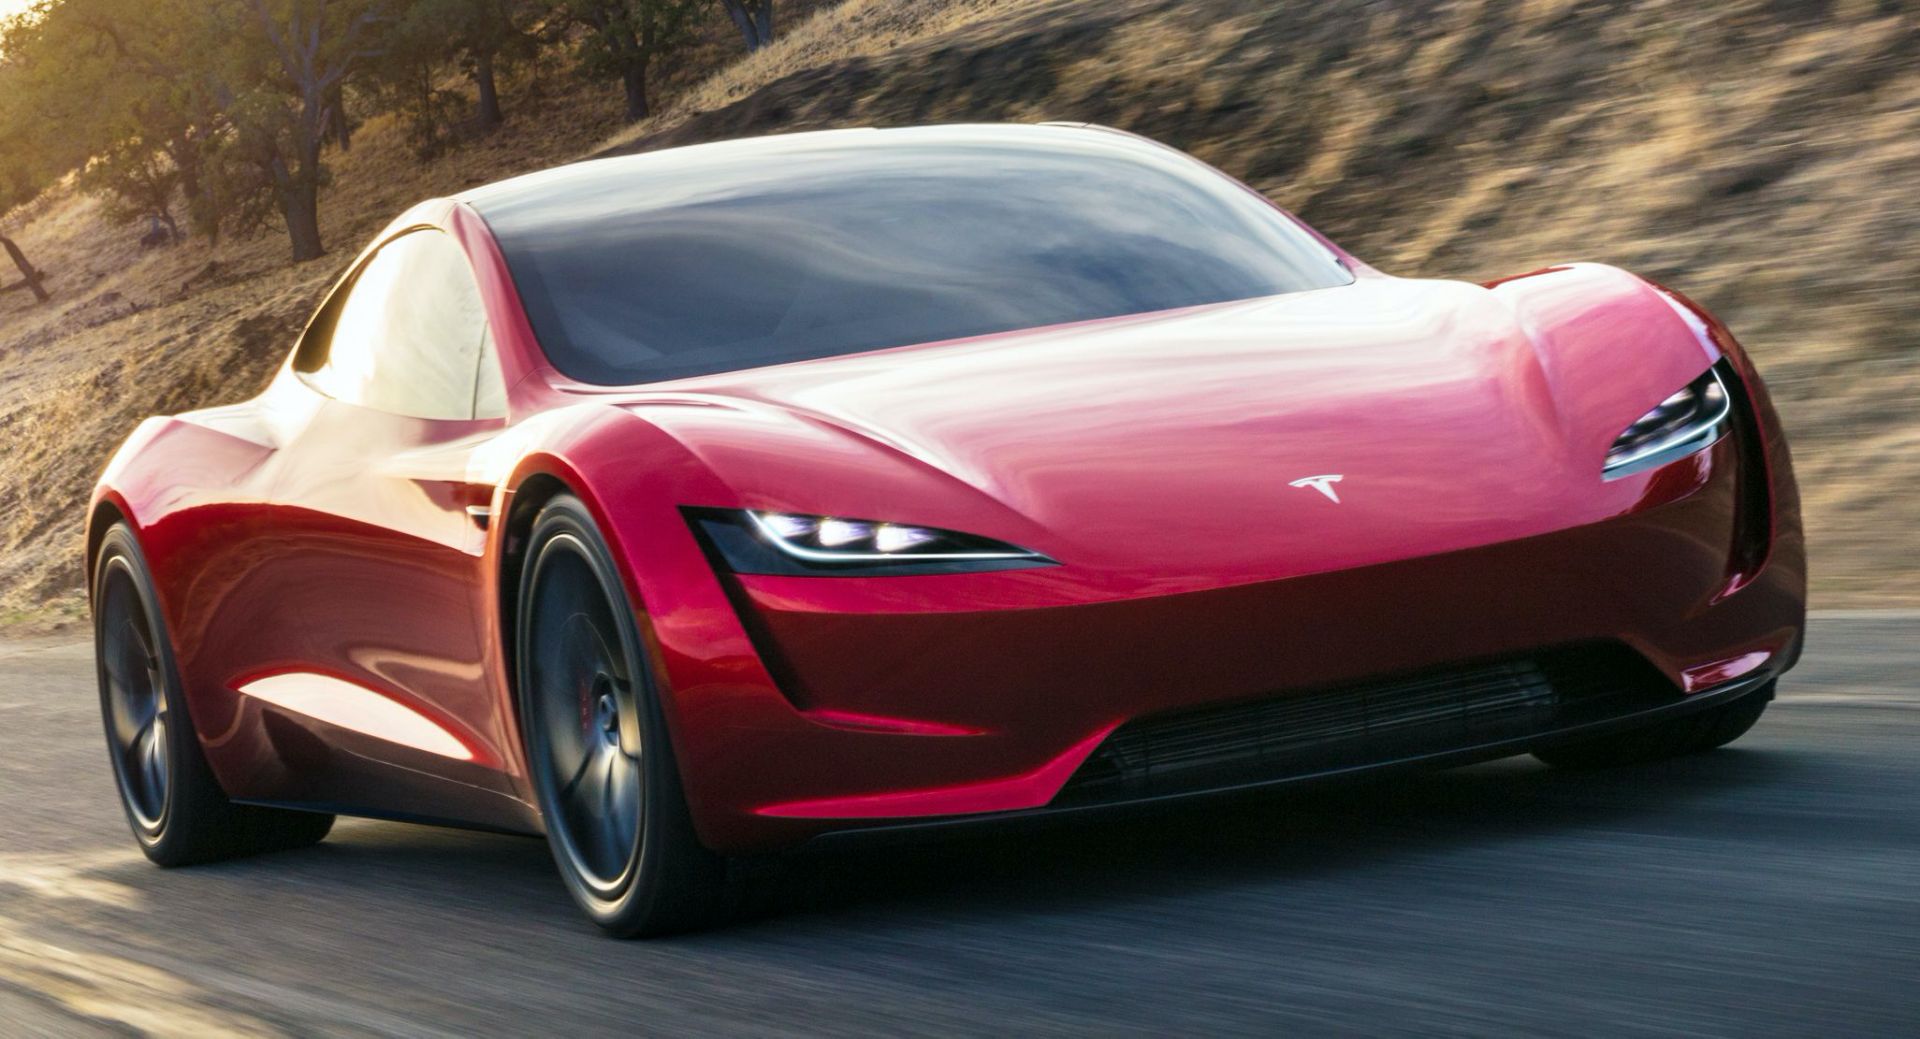 Elon Musk affirms new Tesla Roadster has been deferred to 2022